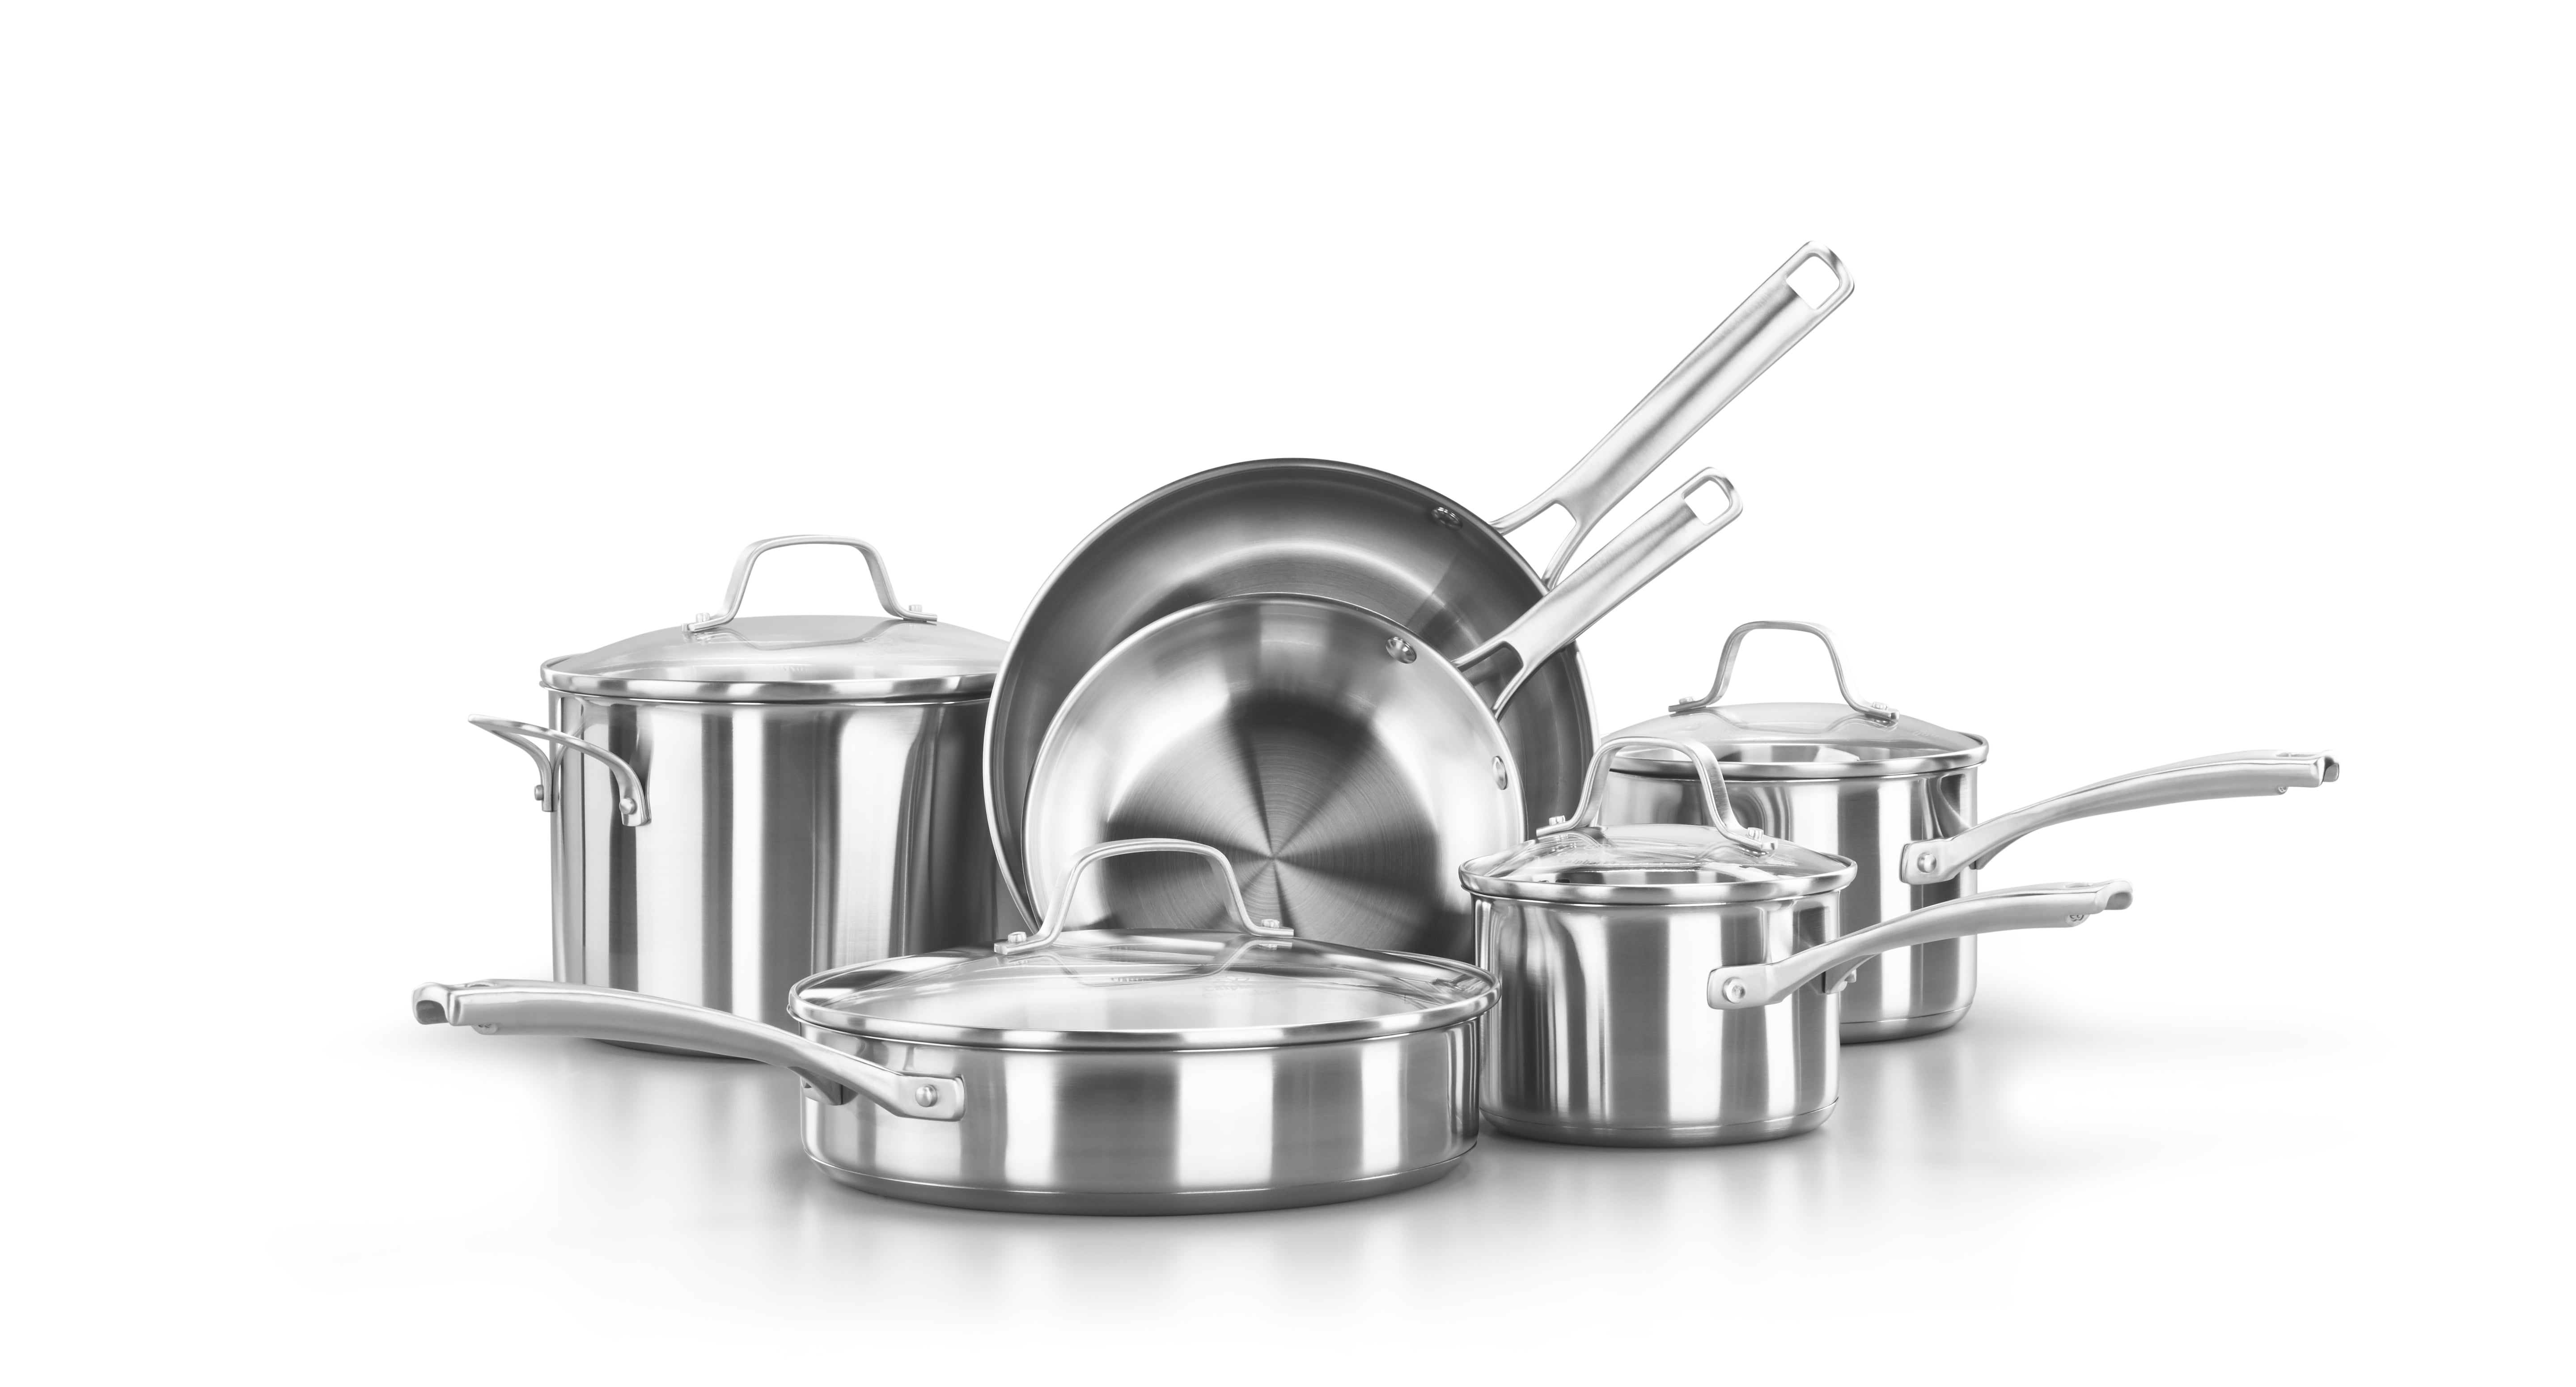 Calphalon Classic Stainless Steel 10-Piece Cookware Set